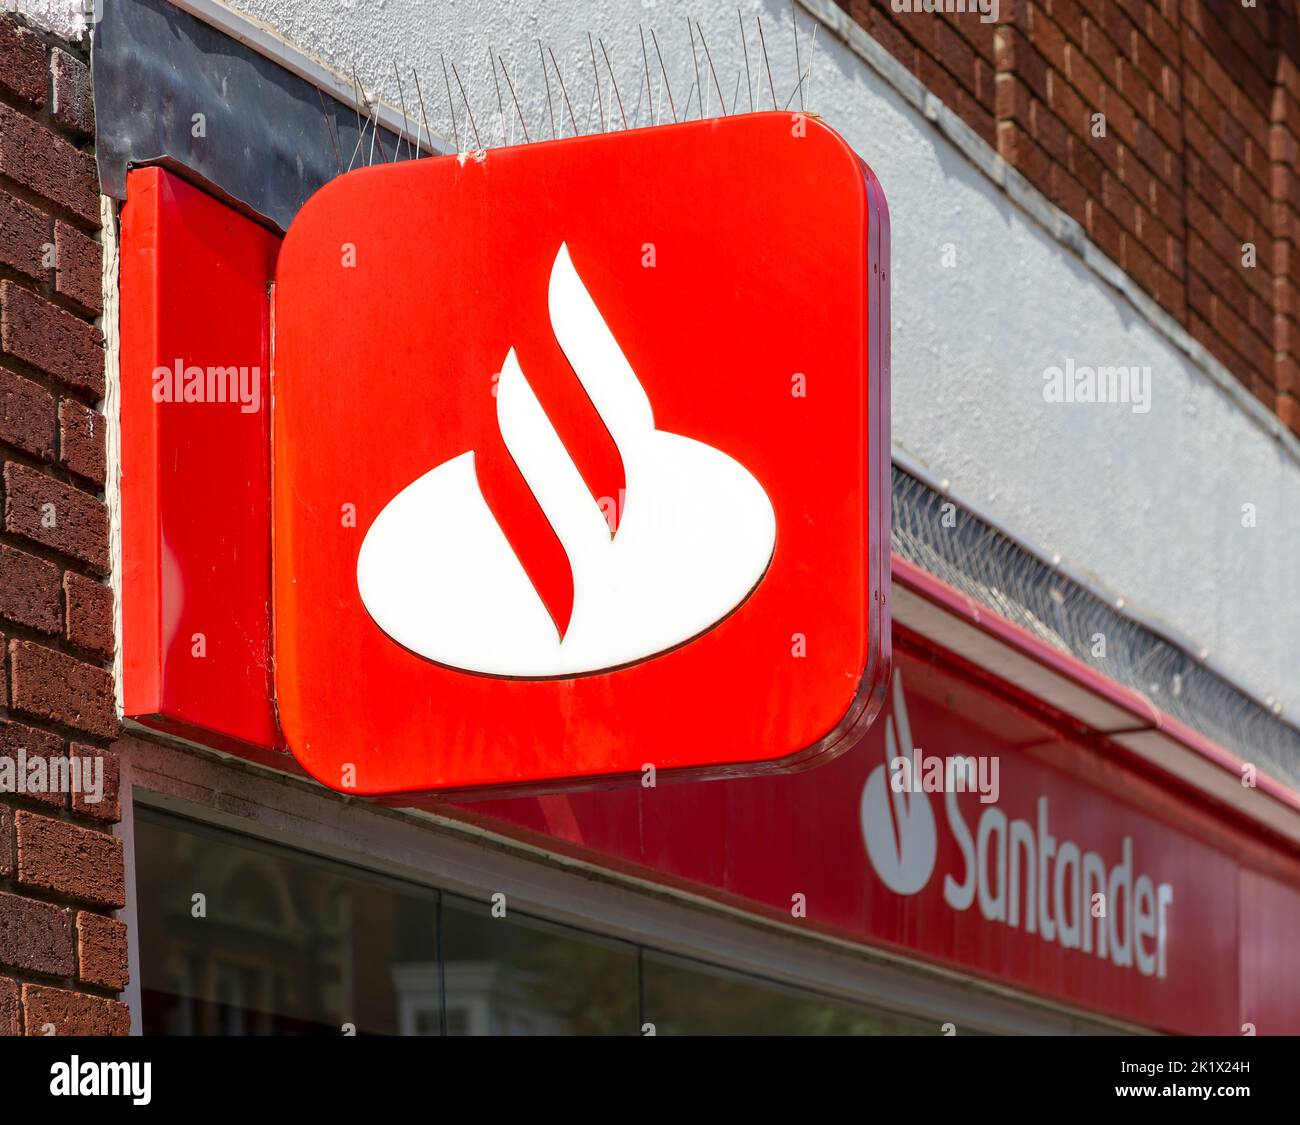 Santander bank logo sign, Felixstowe, Suffolk,  England, UK Stock Photo